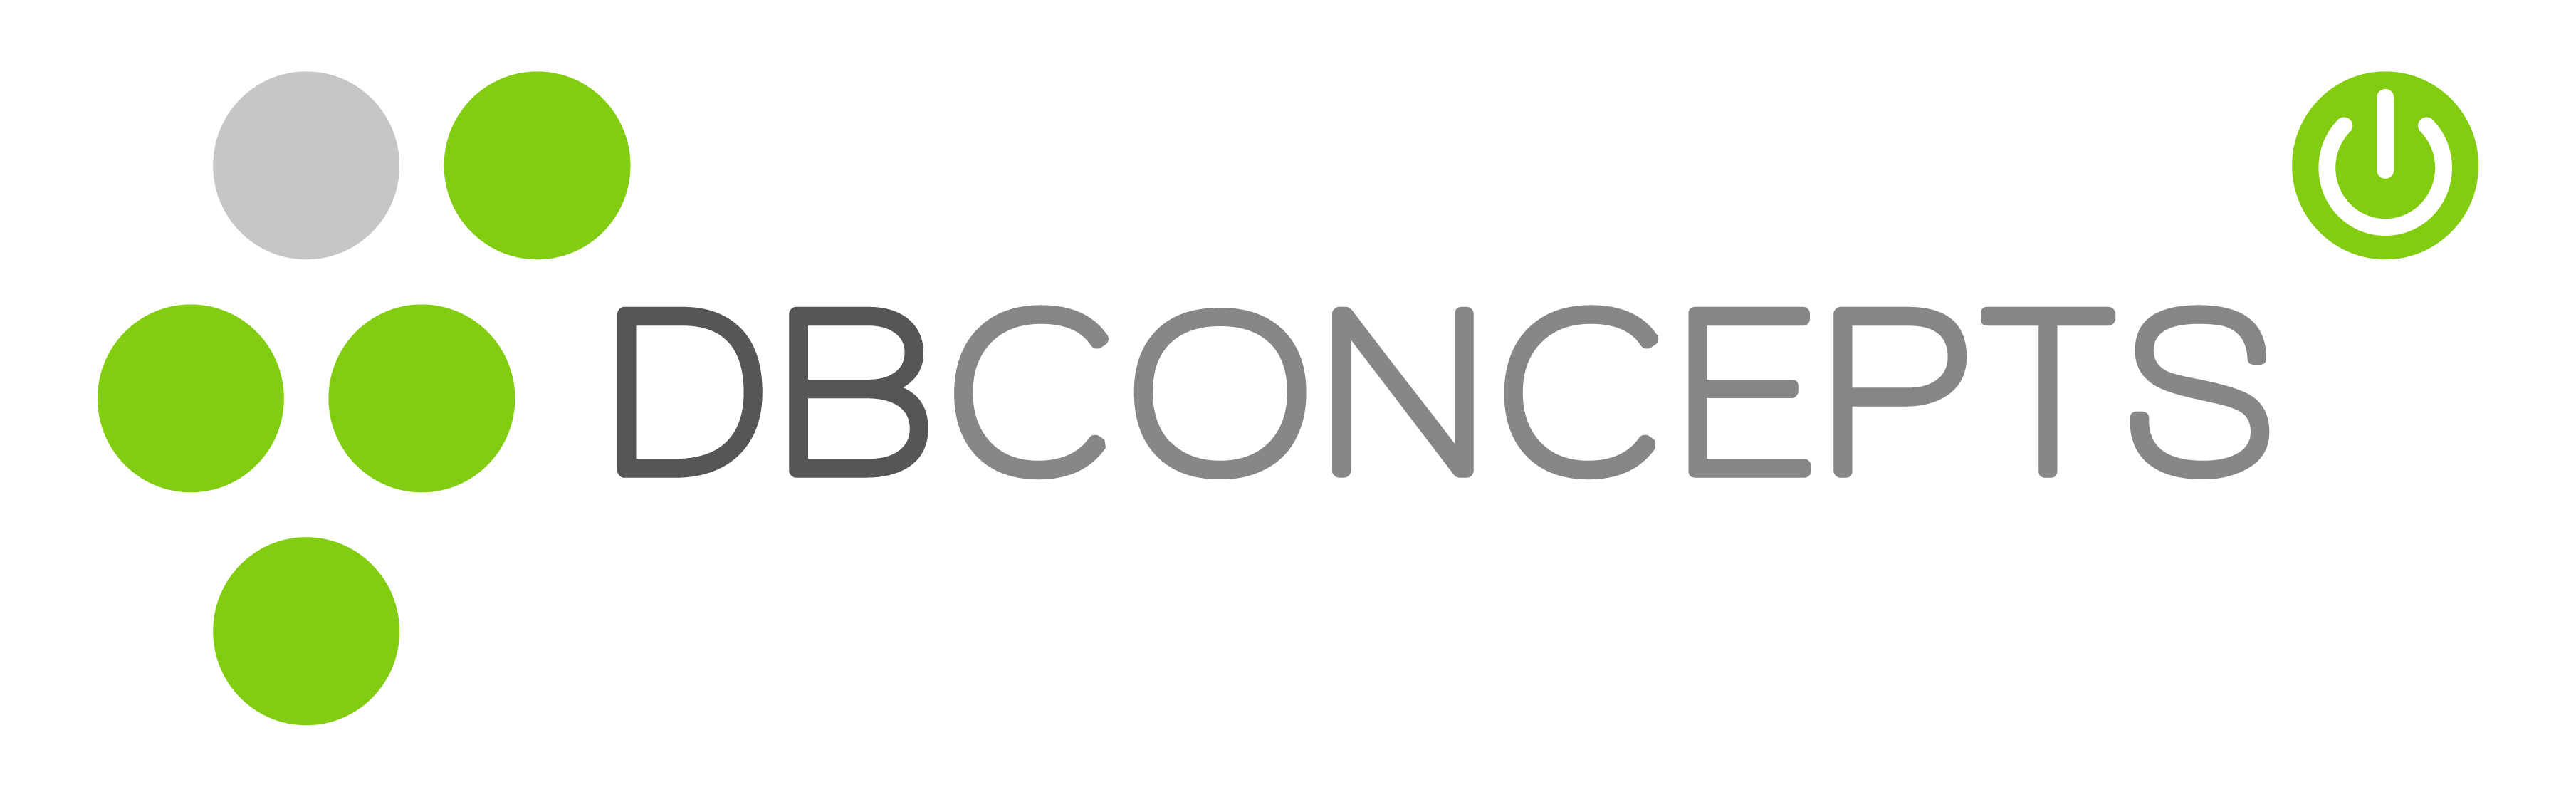 dbconcepts logo